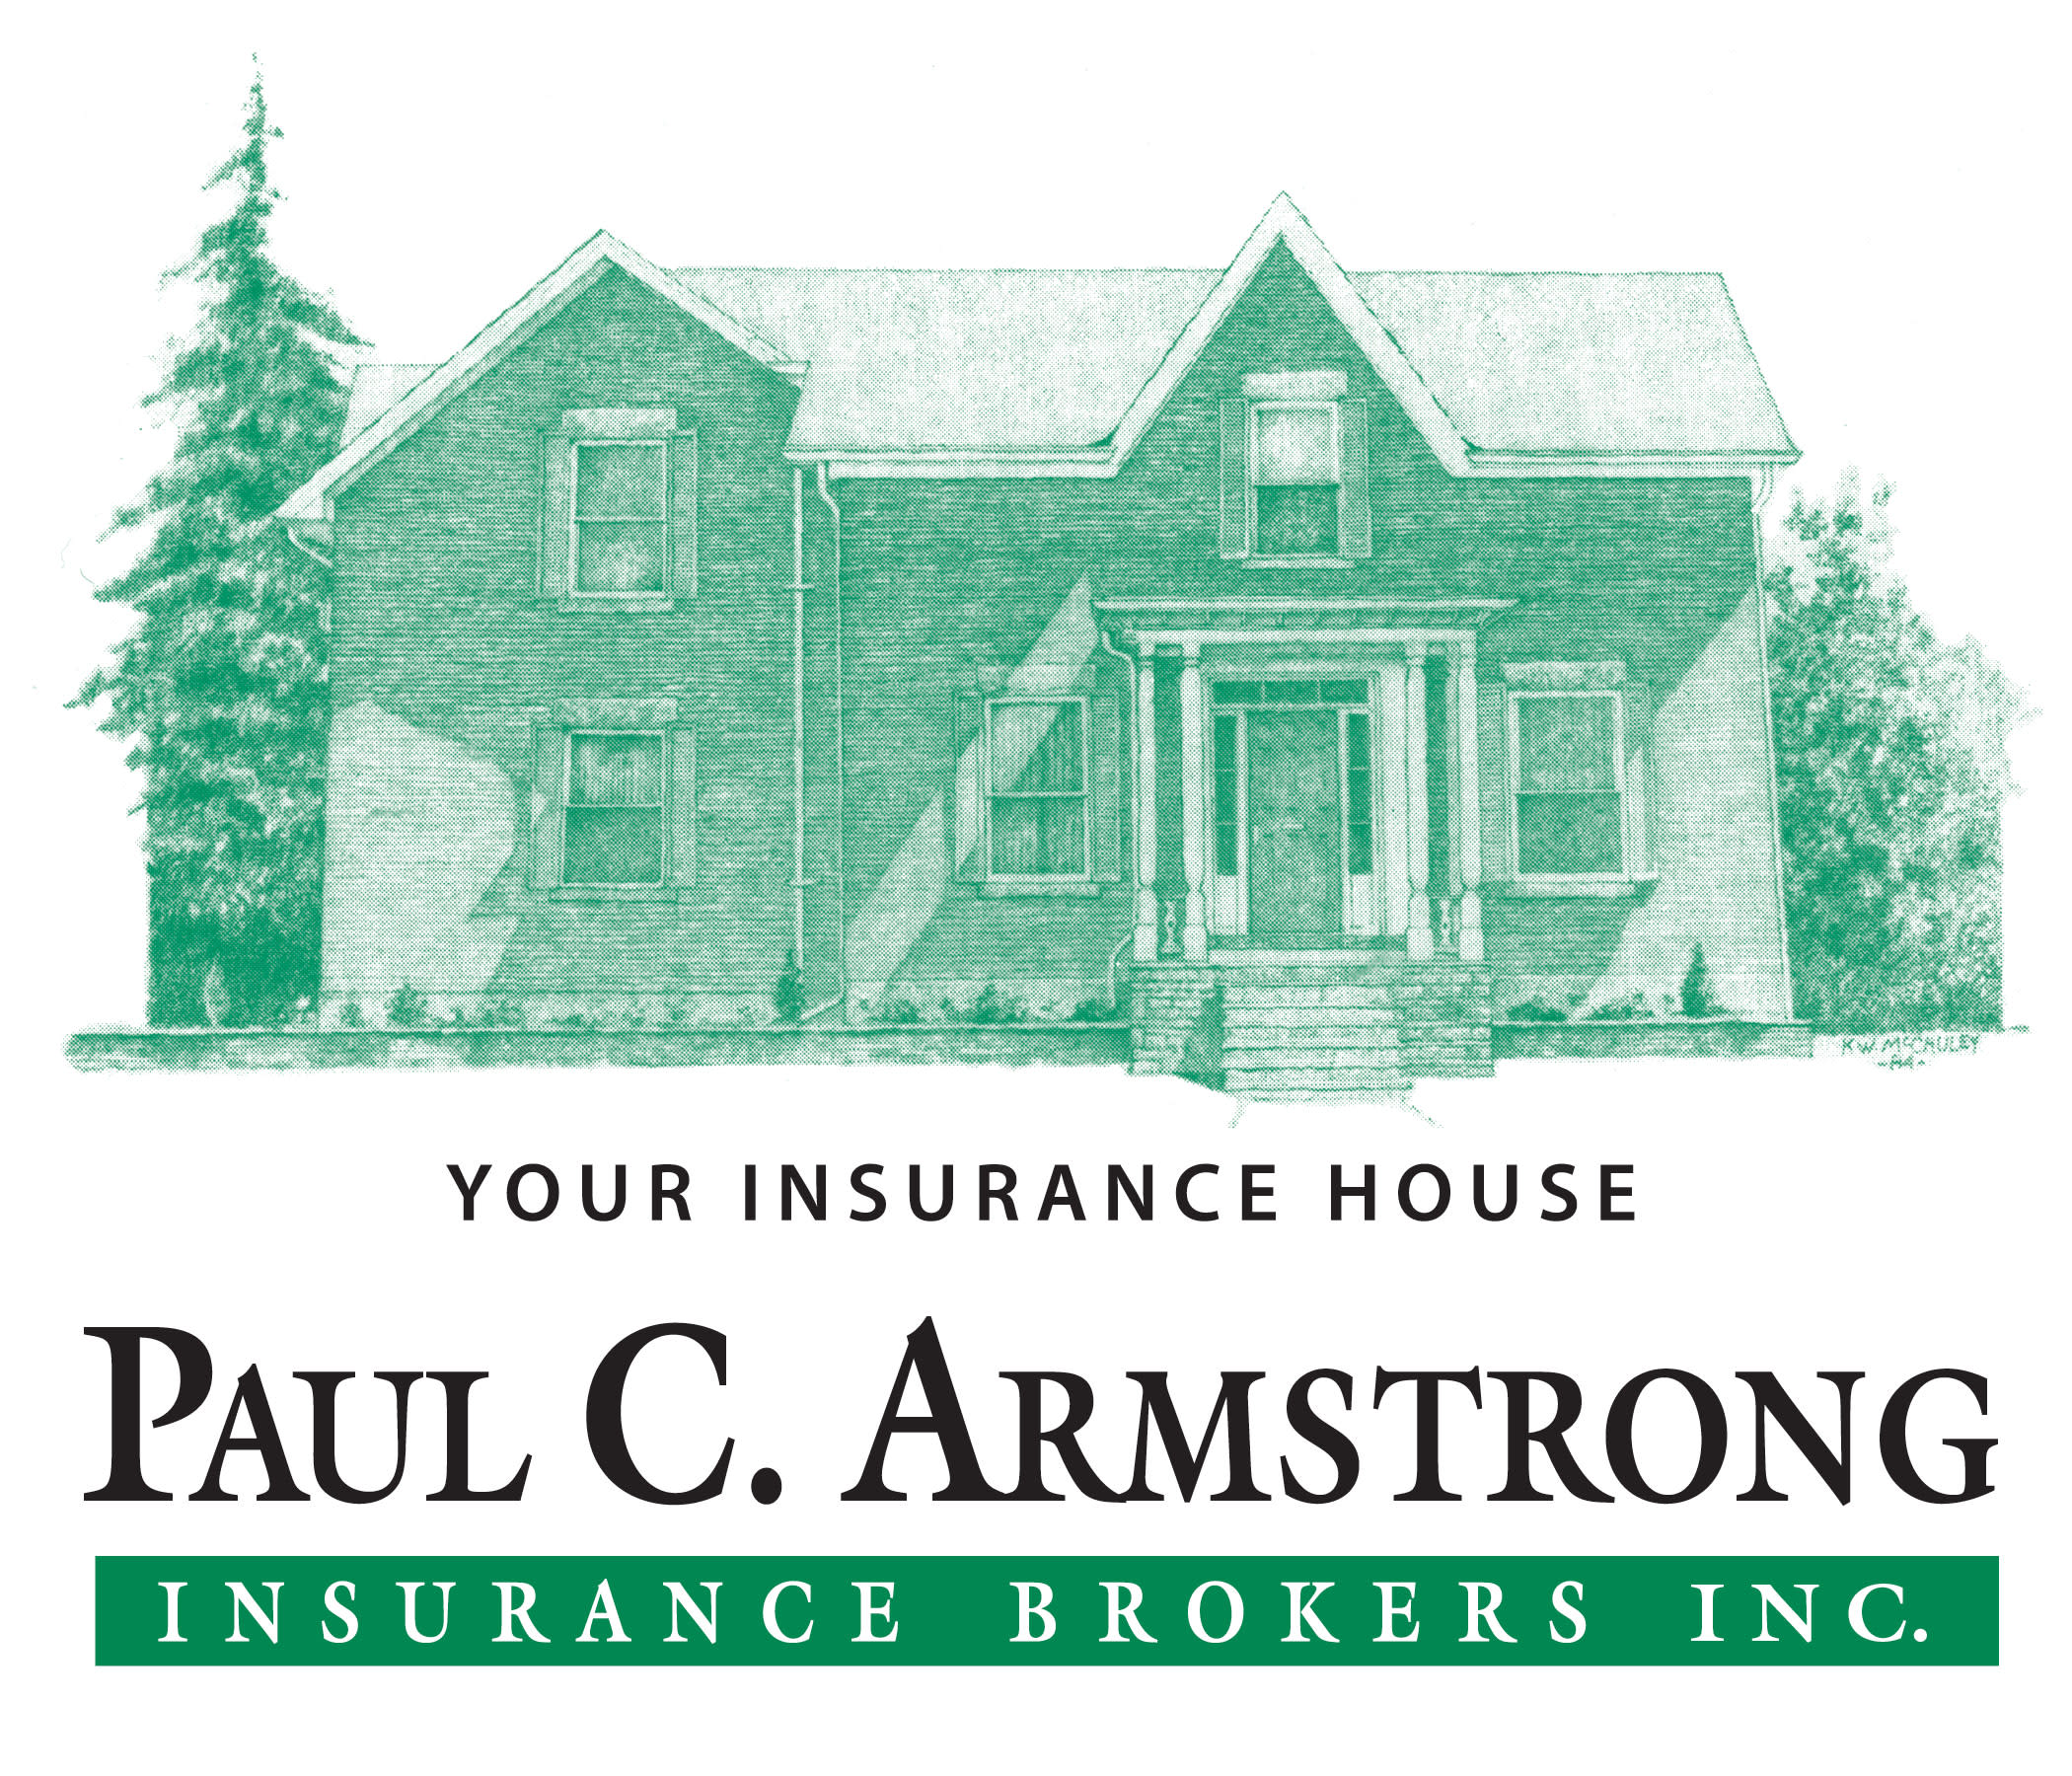 Paul C Armstrong Insurance Brokers Inc.